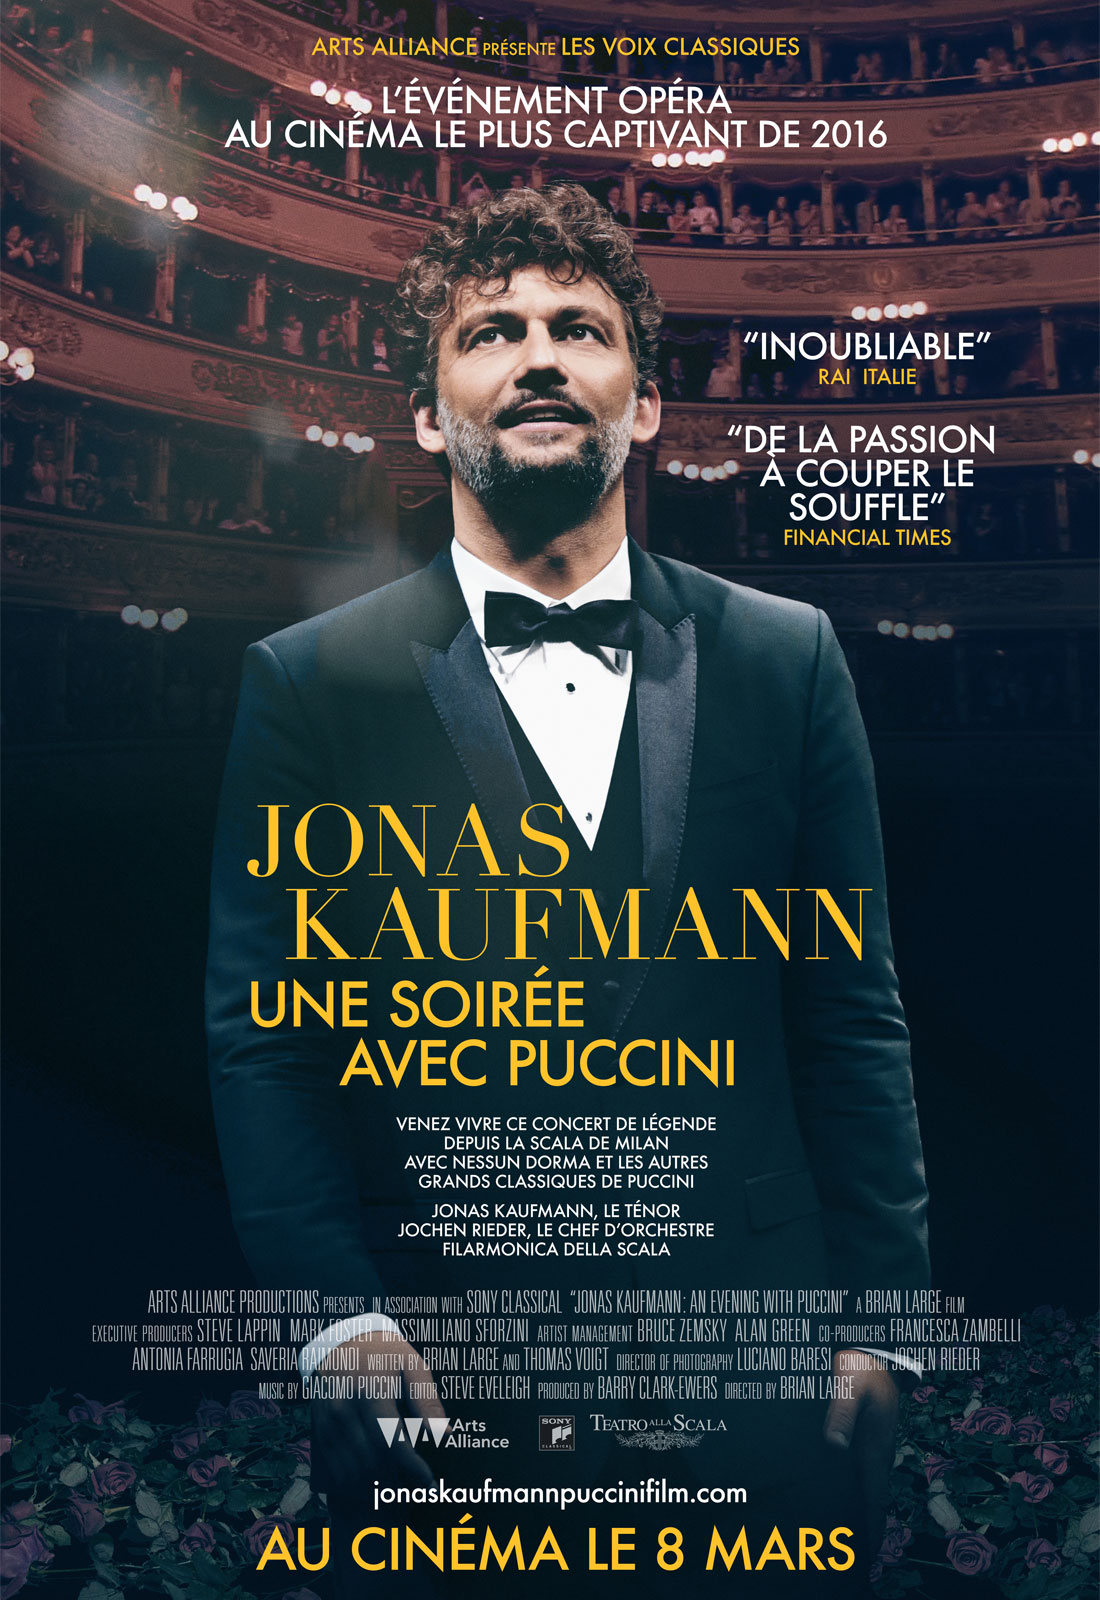 Jonas Kaufmann, une soirée avec Puccini (Arts Alliance)